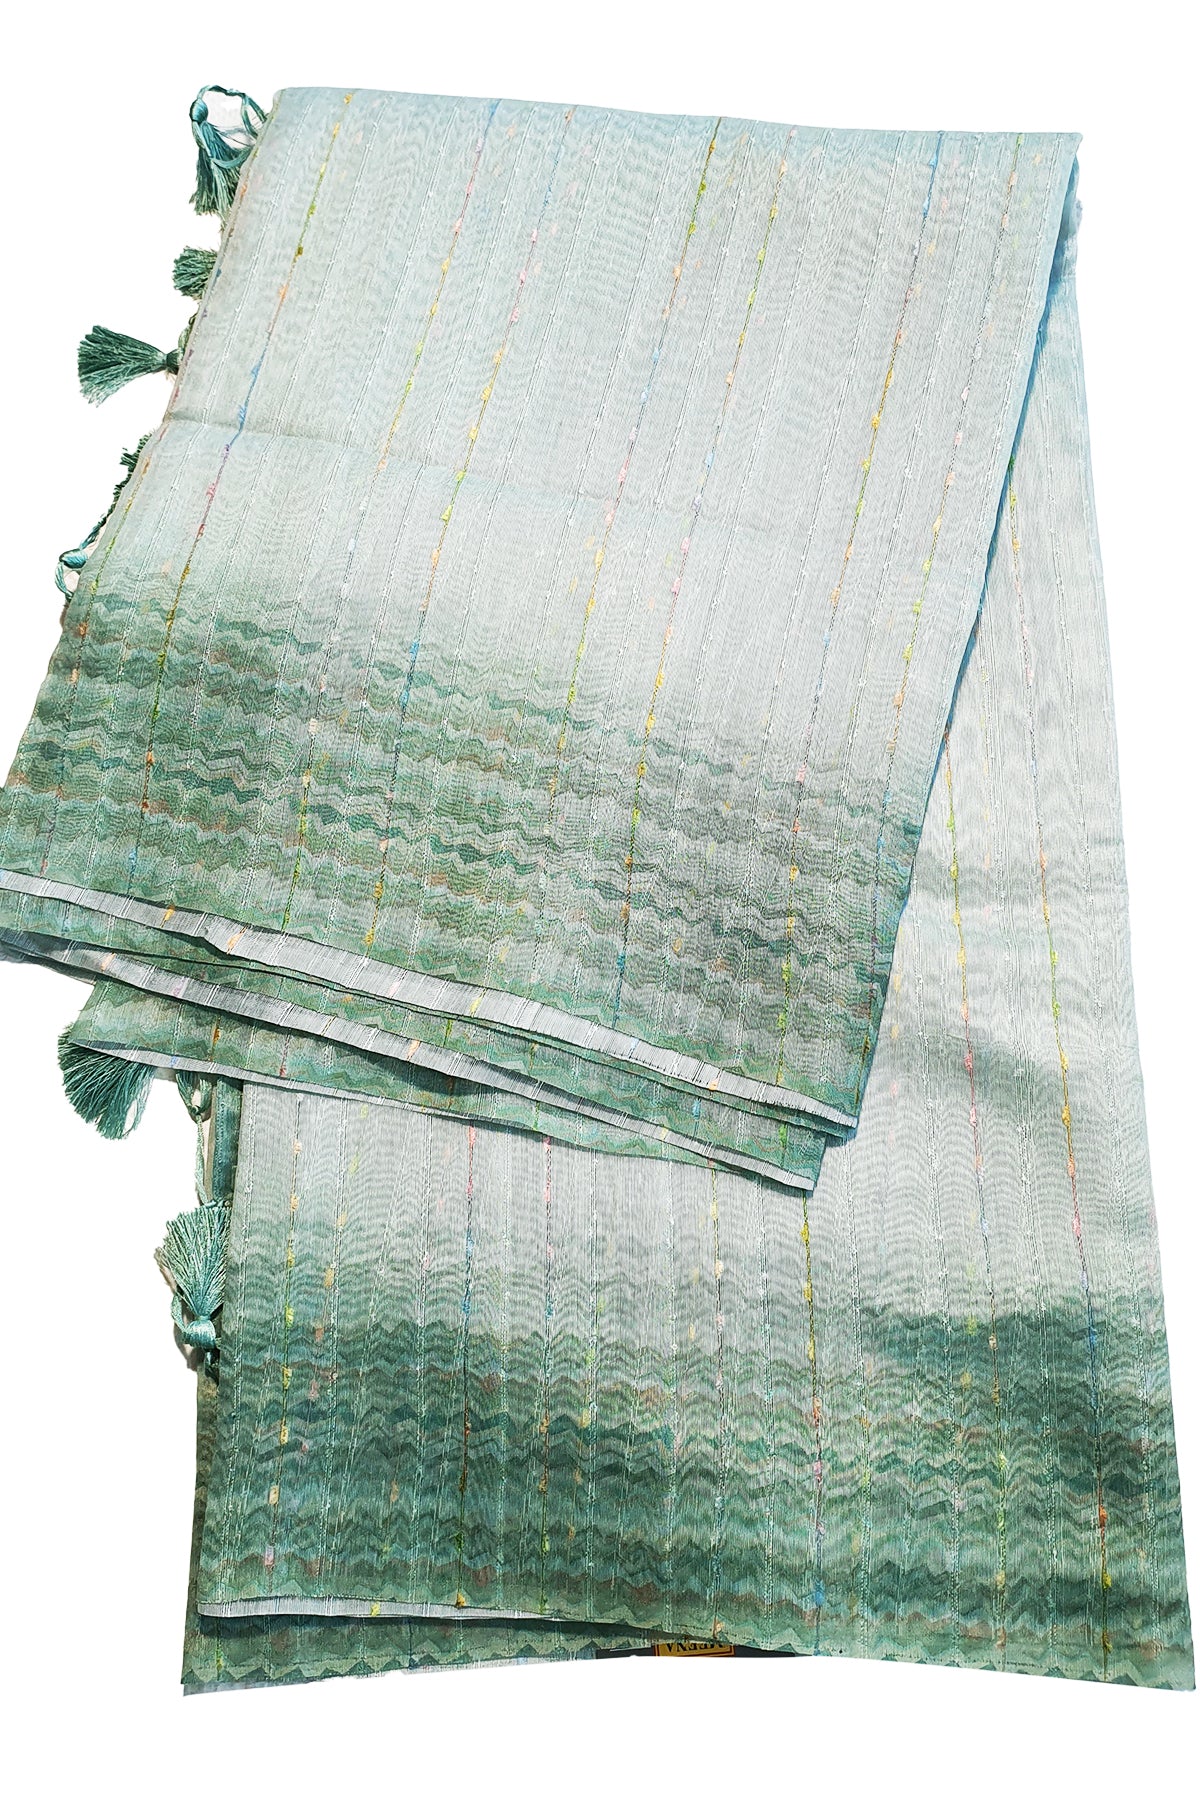 Sea Green Linen Floral Printed Weaving Saree